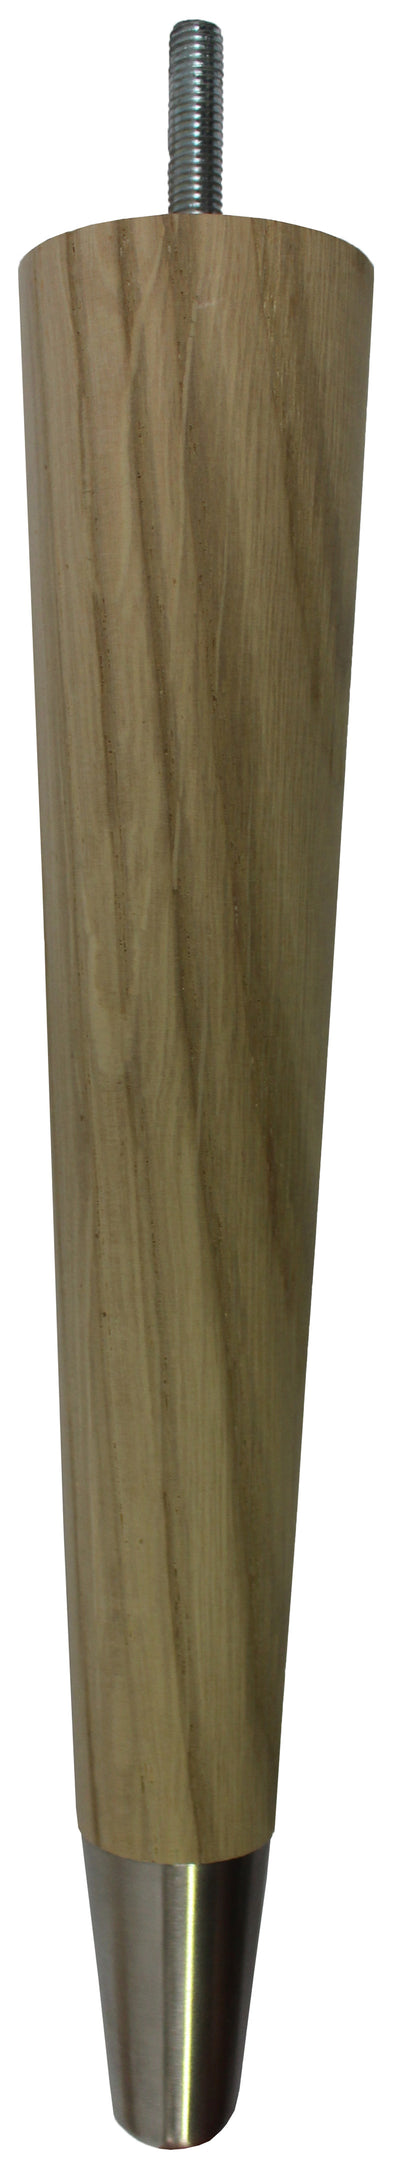 Liva Solid Oak Tapered Furniture Legs - Raw Finish - Satin Slipper Cups - Set of 4